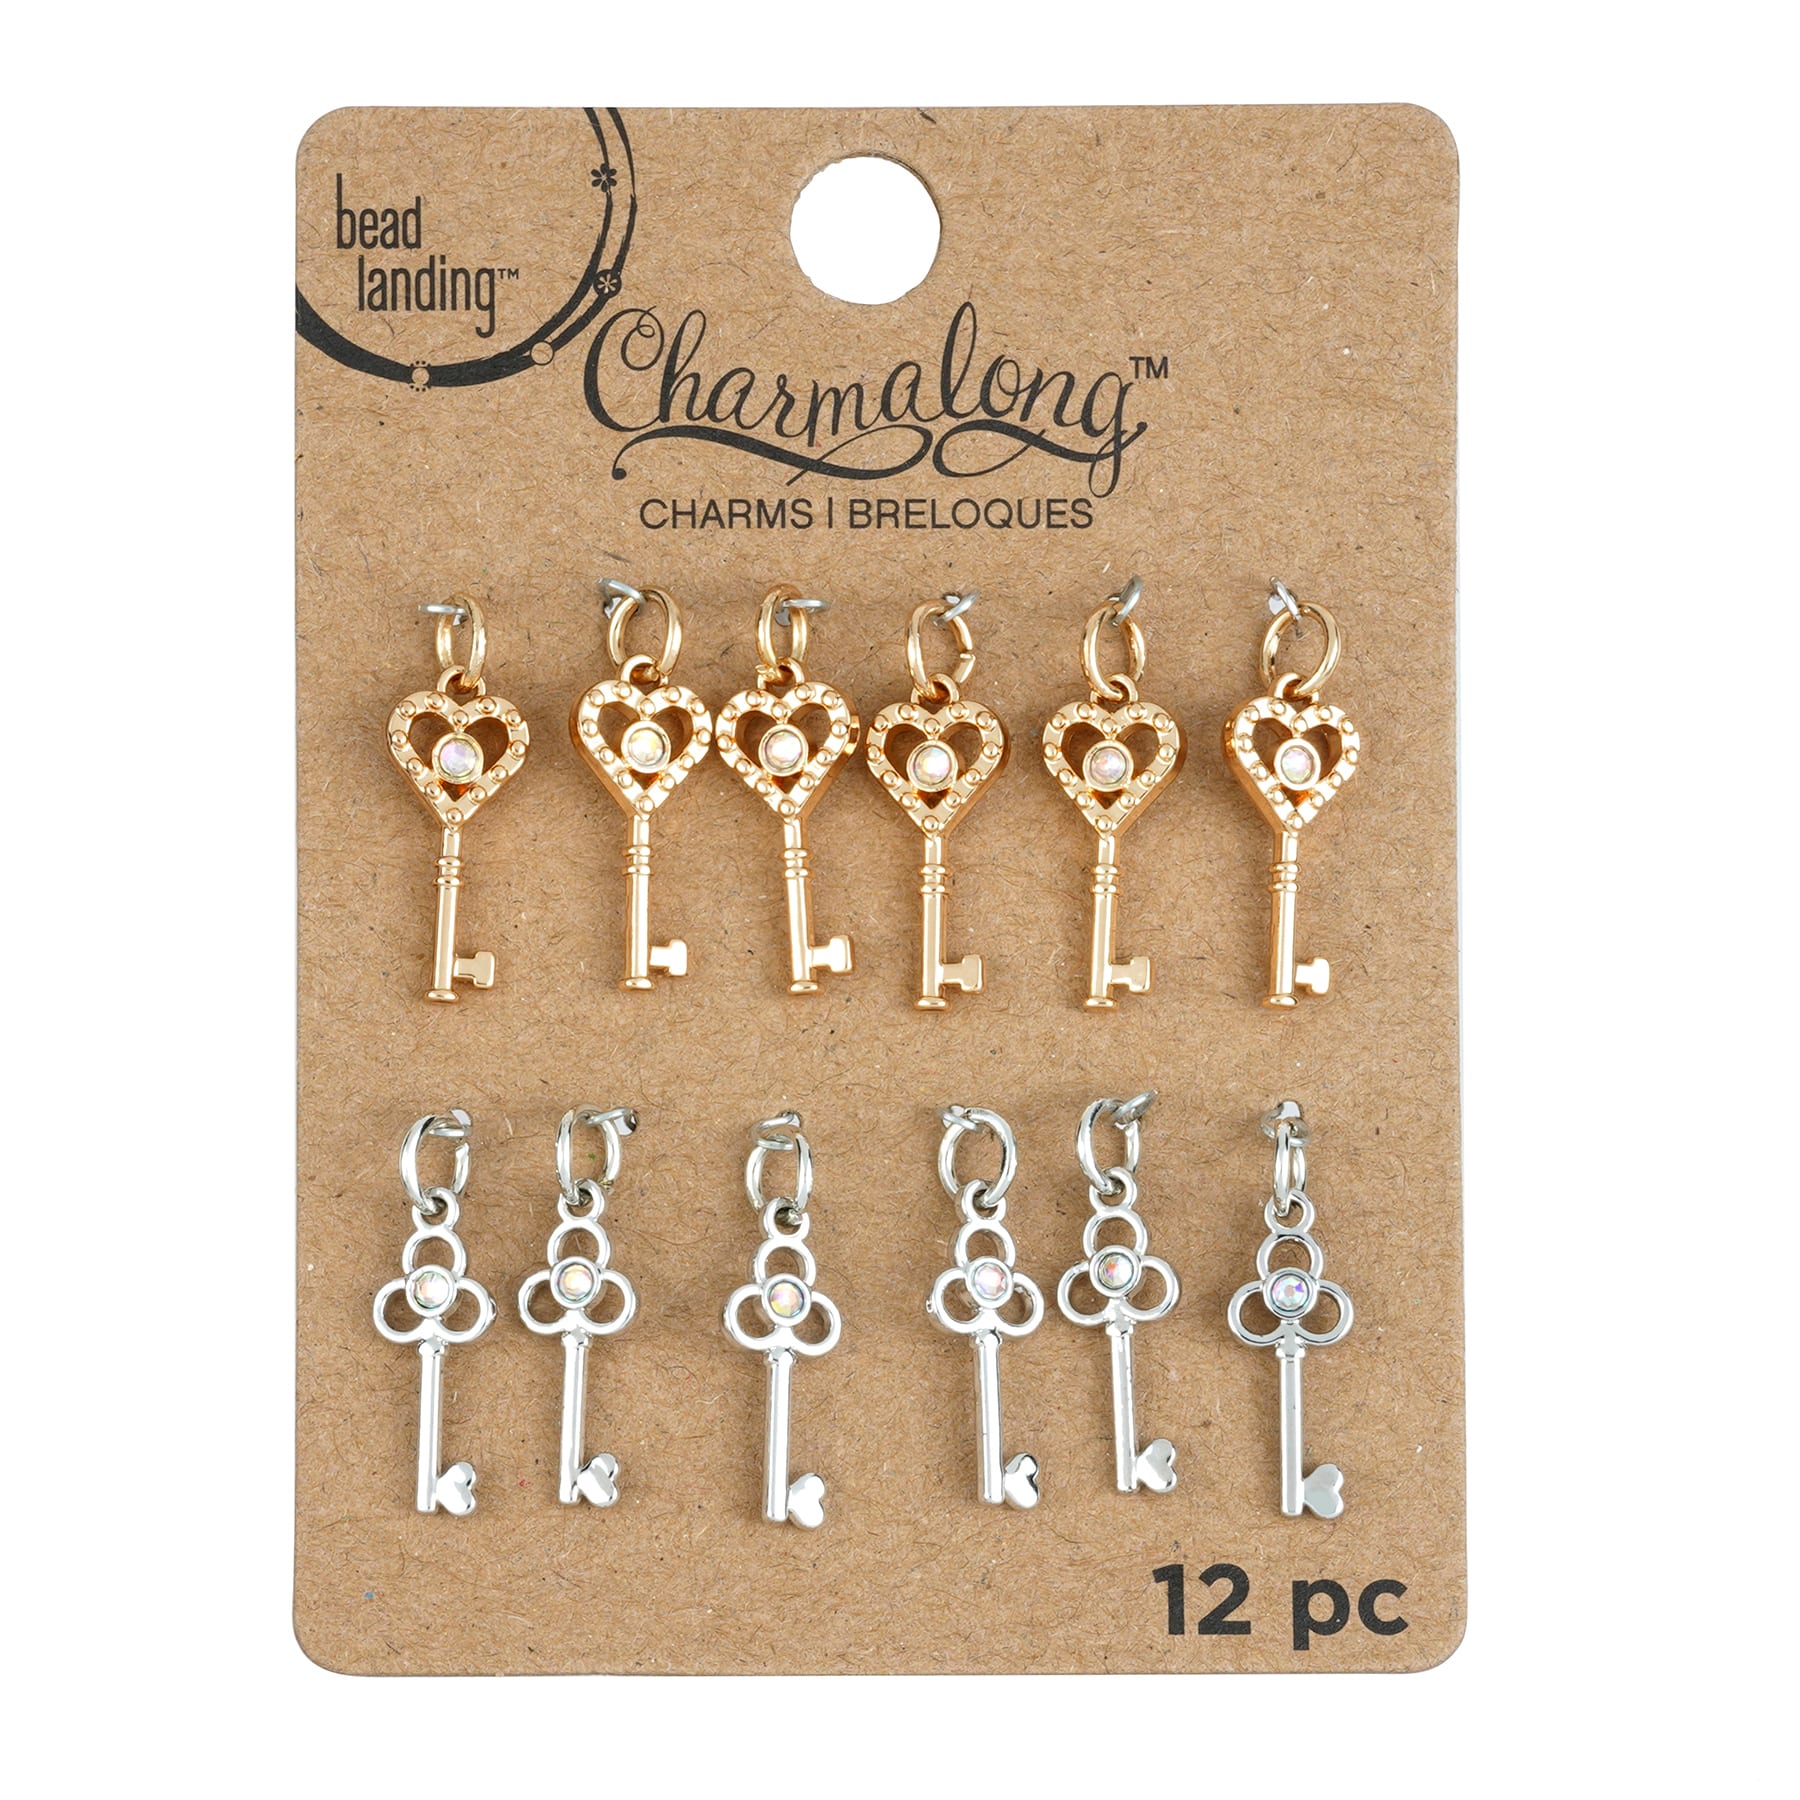 Charmalong™ Gold & Rhodium Key Charms by Bead Landing™